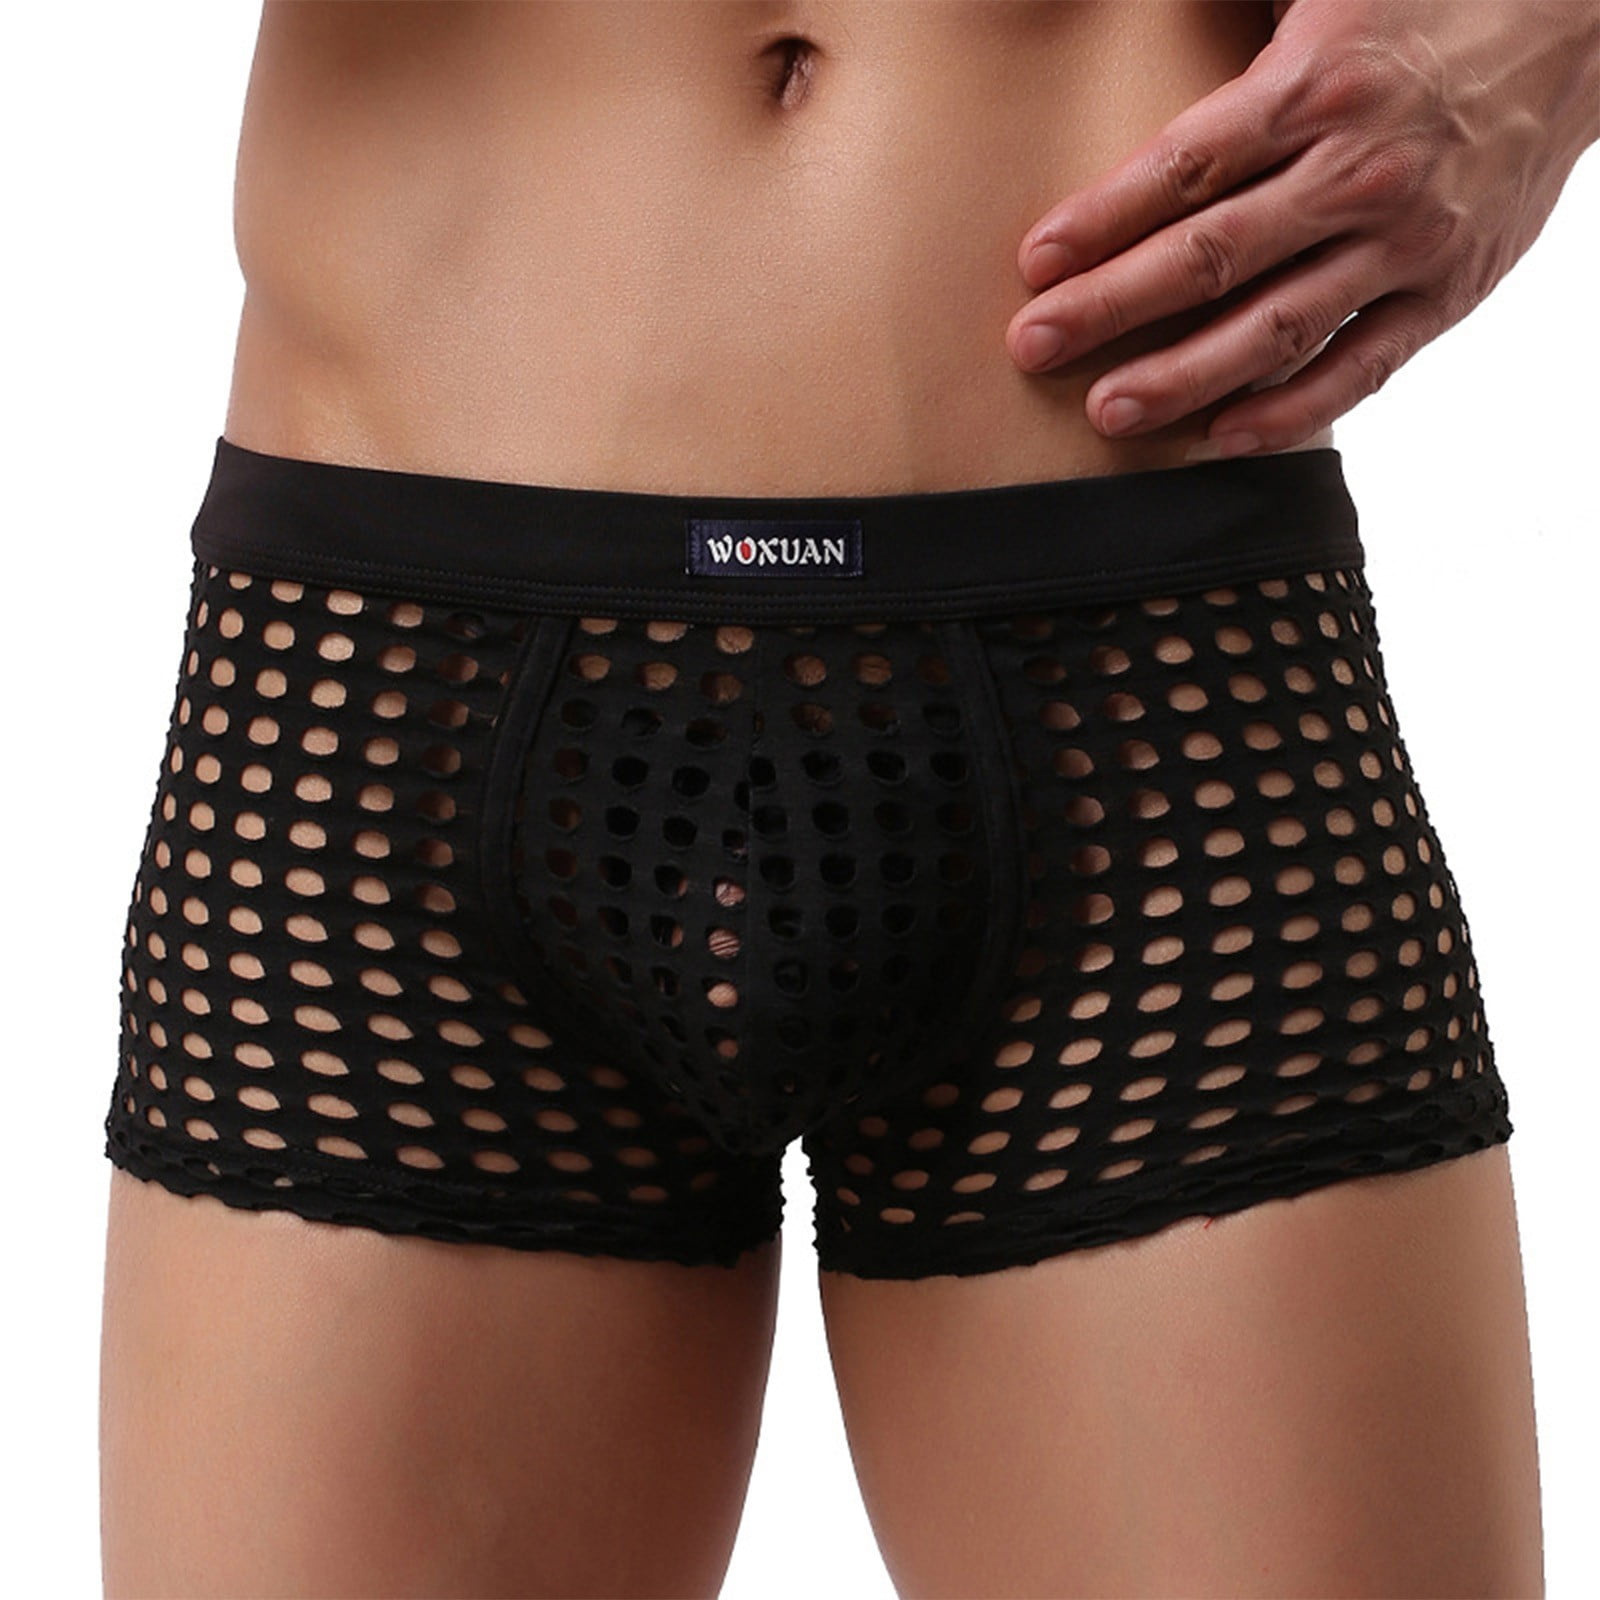 OVTICZA Underwear for Men Ruffle Pouch Sexy Plus Size Boxer Briefs,3 Pack  Black 2XL